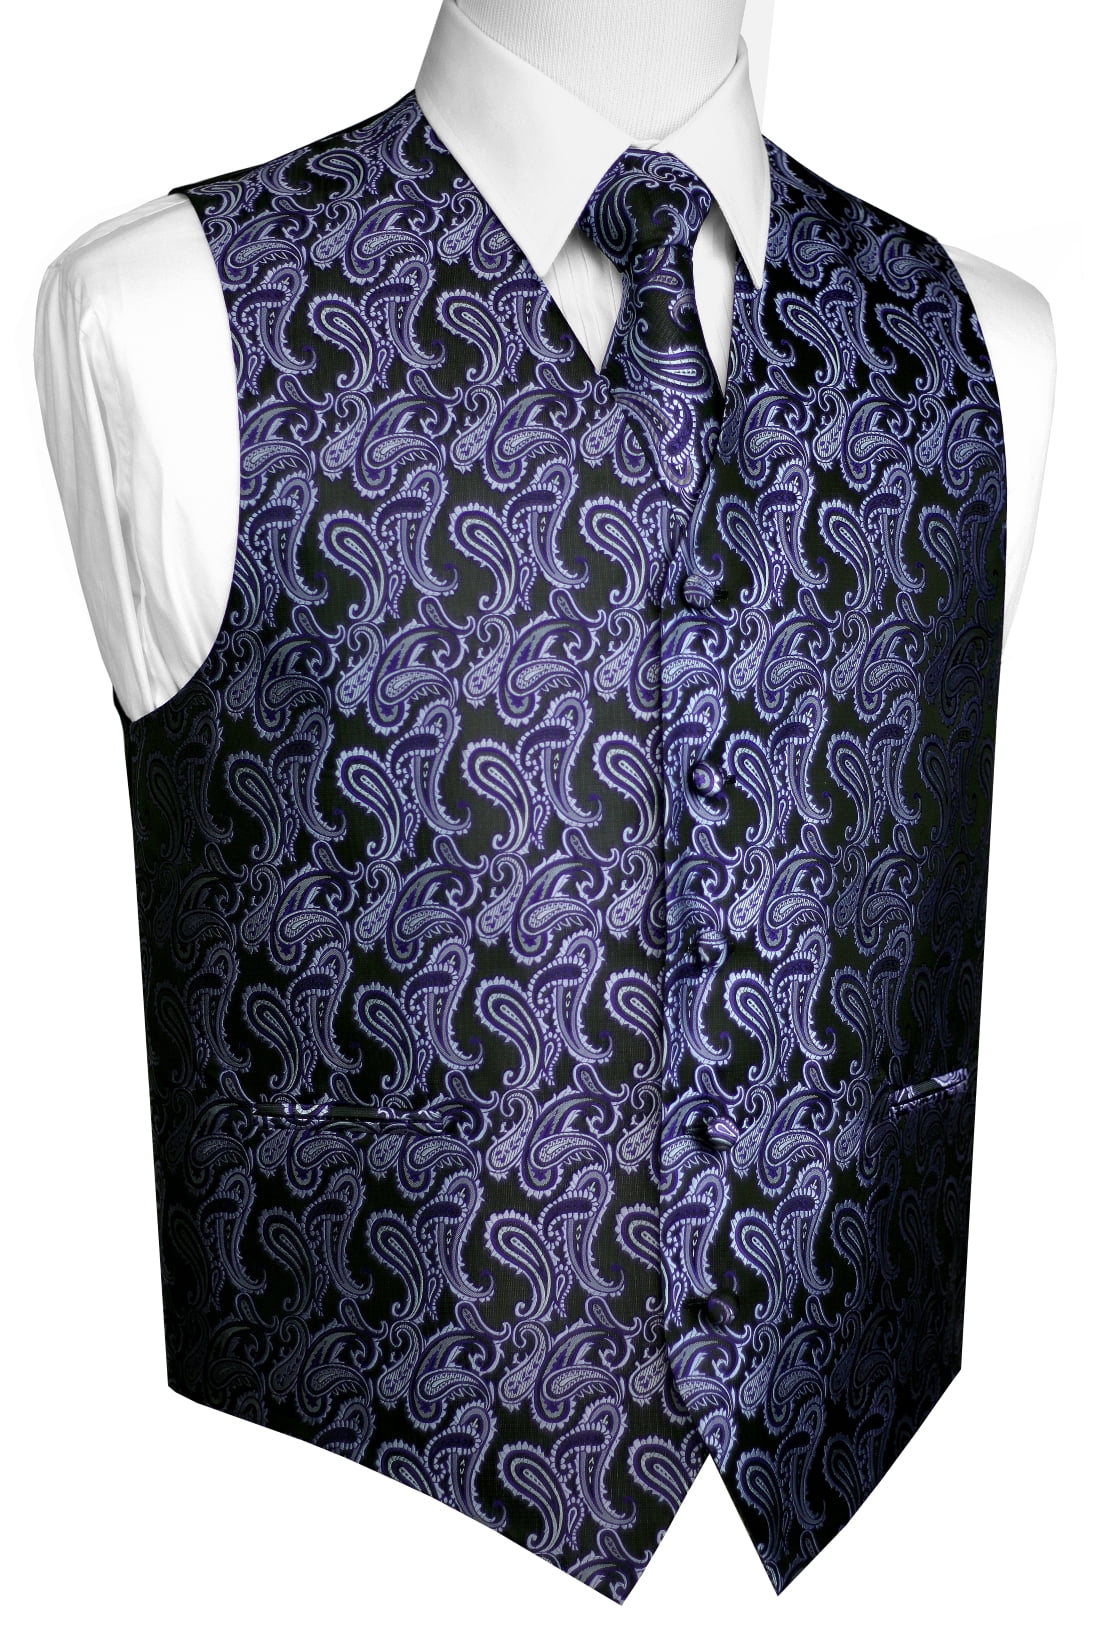 New Brand Q Men's Micro Fiber Neck Tie & Hankie Set Paisley purple formal 